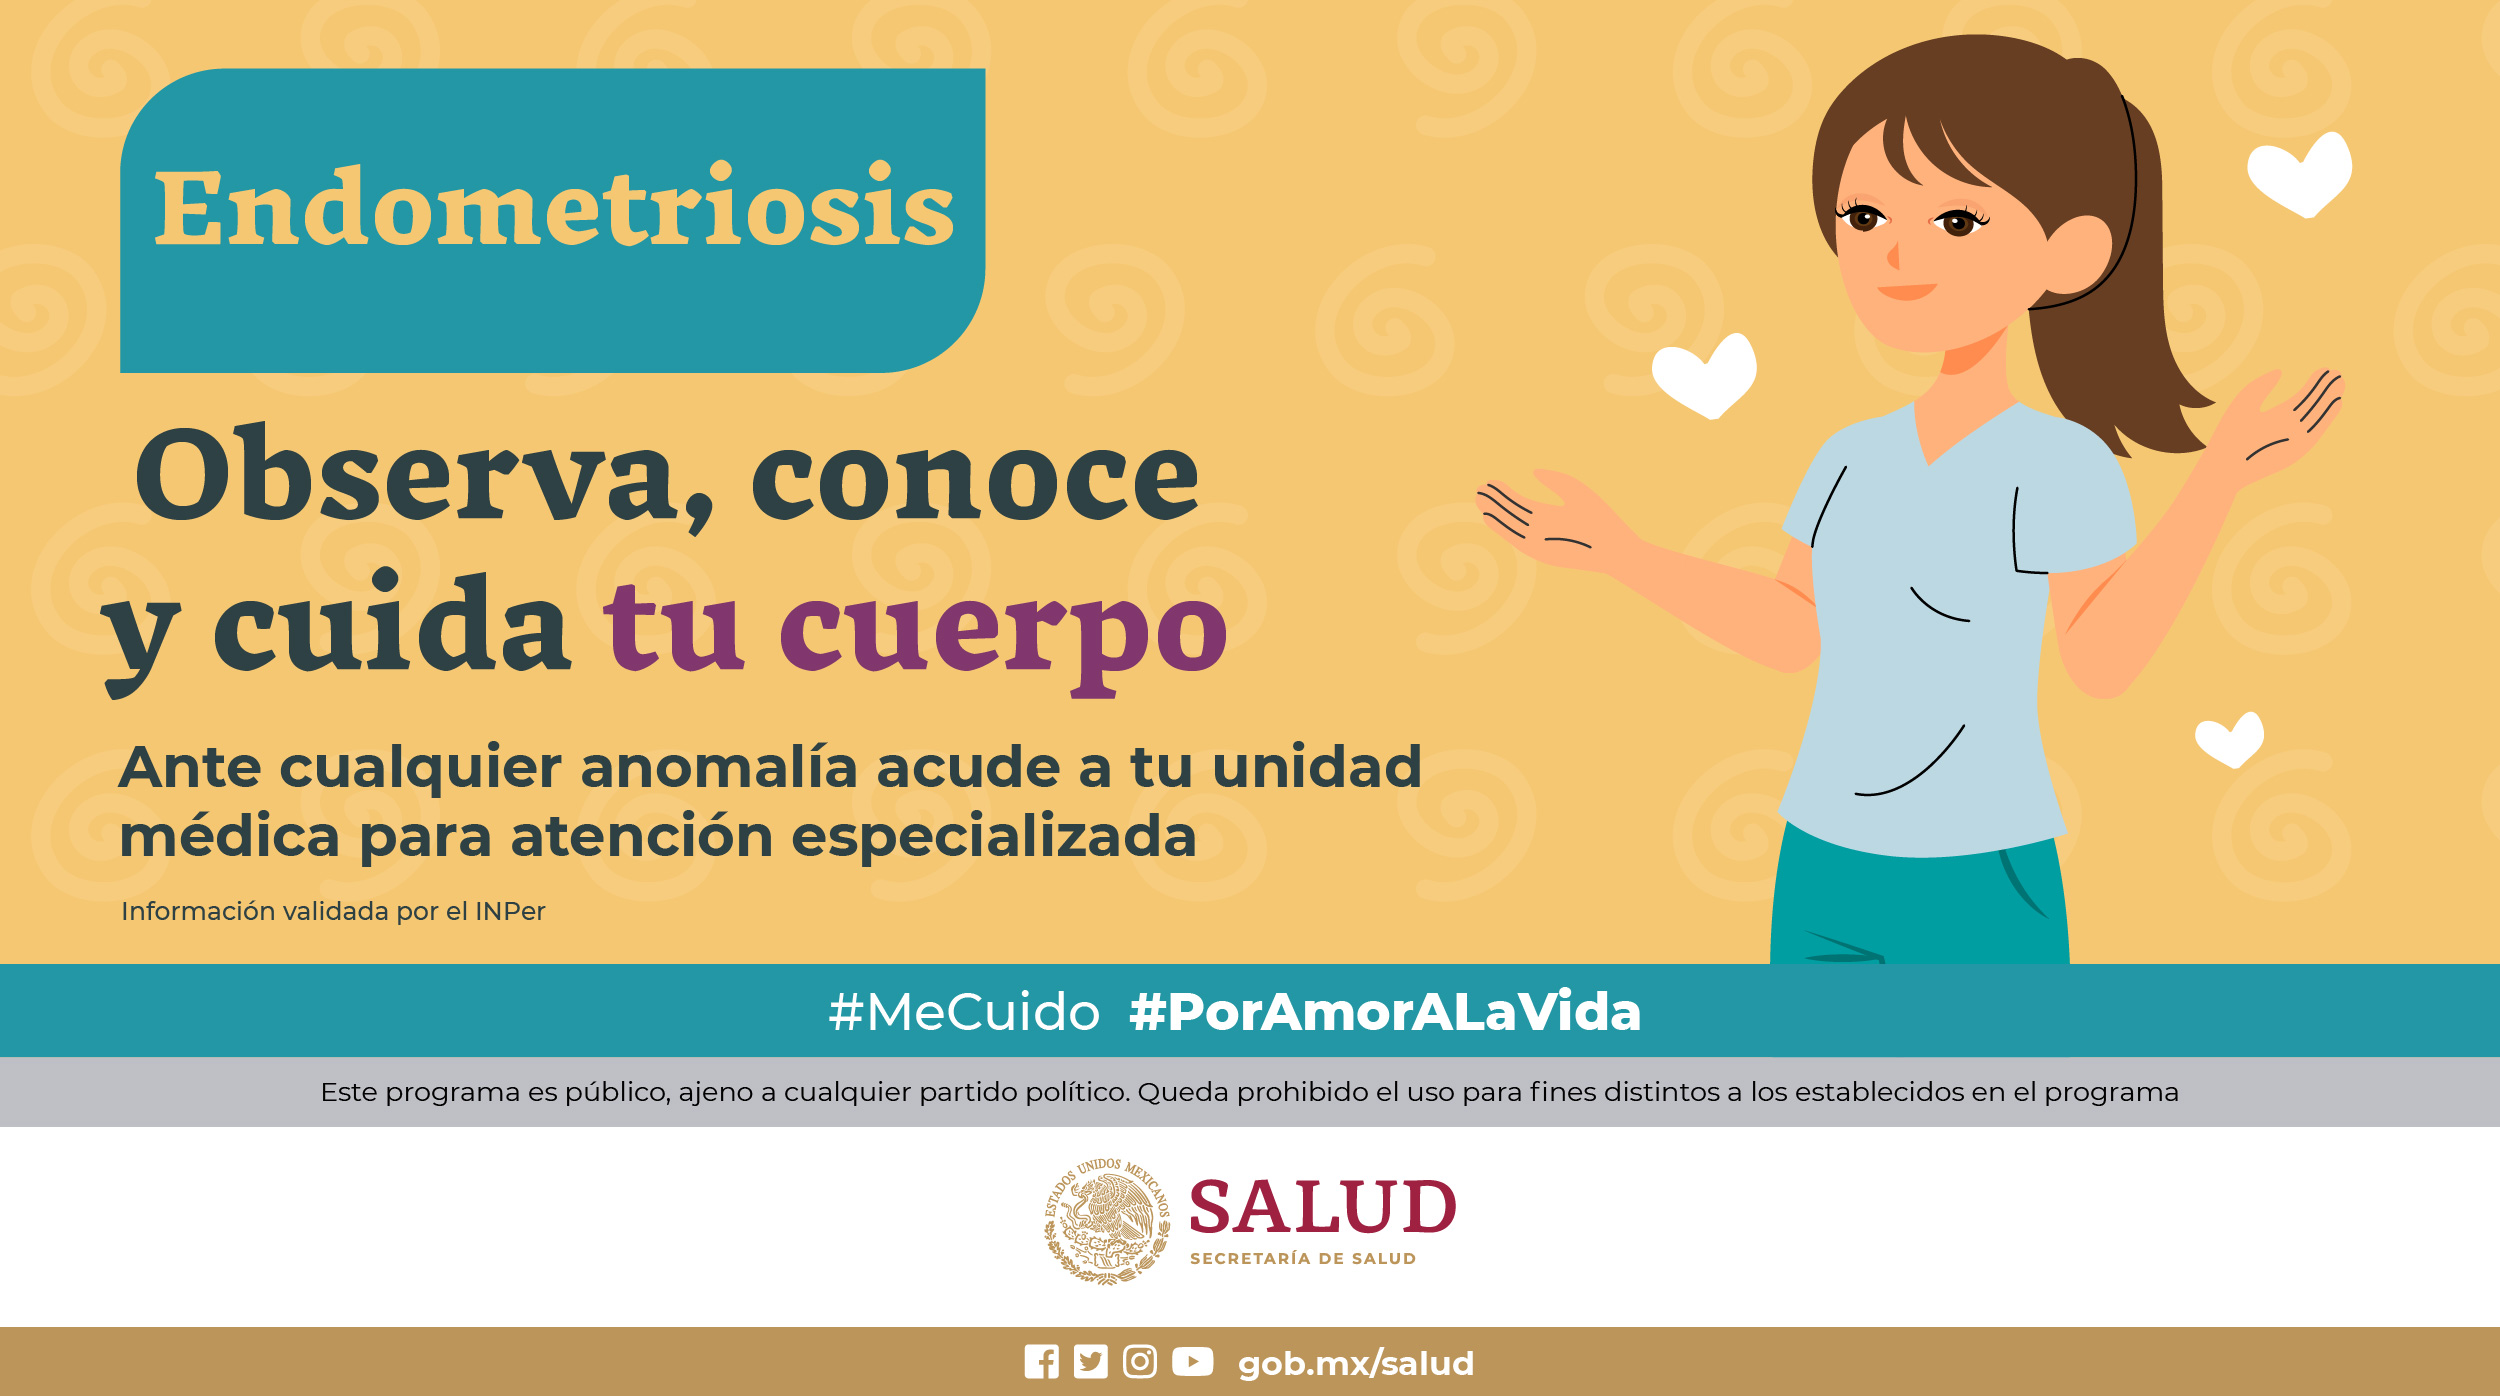 /cms/uploads/image/file/807146/14_MARZO_Di_a_Mundial_de_la_Endometriosis-12.jpg